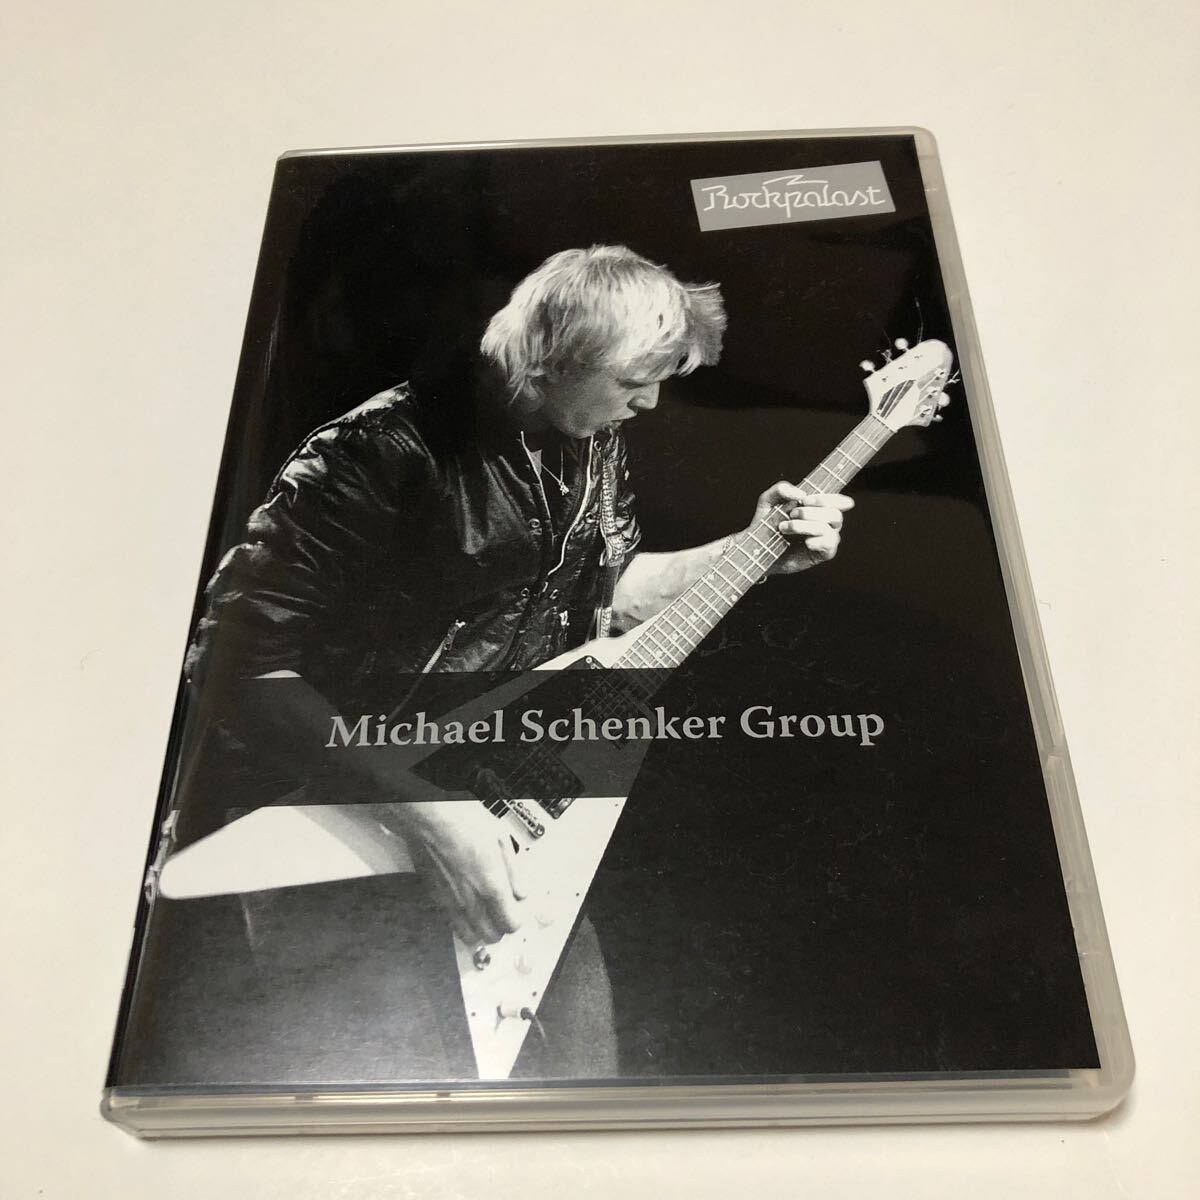  Michael *shen car * group / lock *pa last 1981 DVD+CD